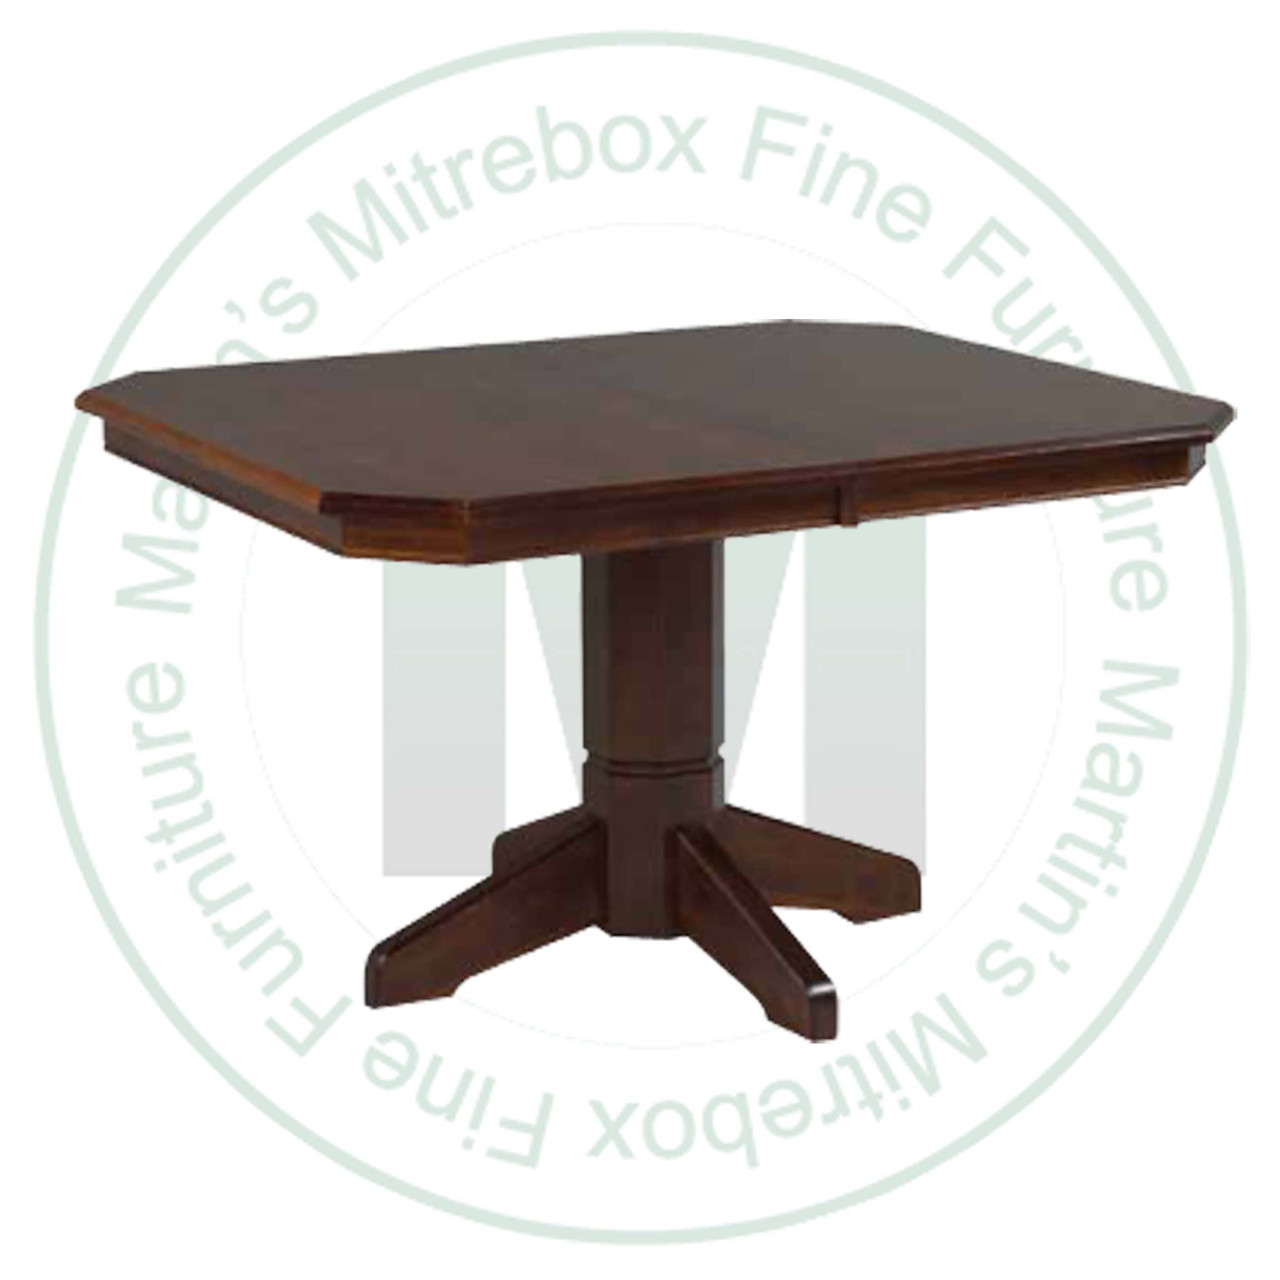 Oak Midtown Single Pedestal Table 36''D x 42''W x 30''H With 1 - 12'' Leaf